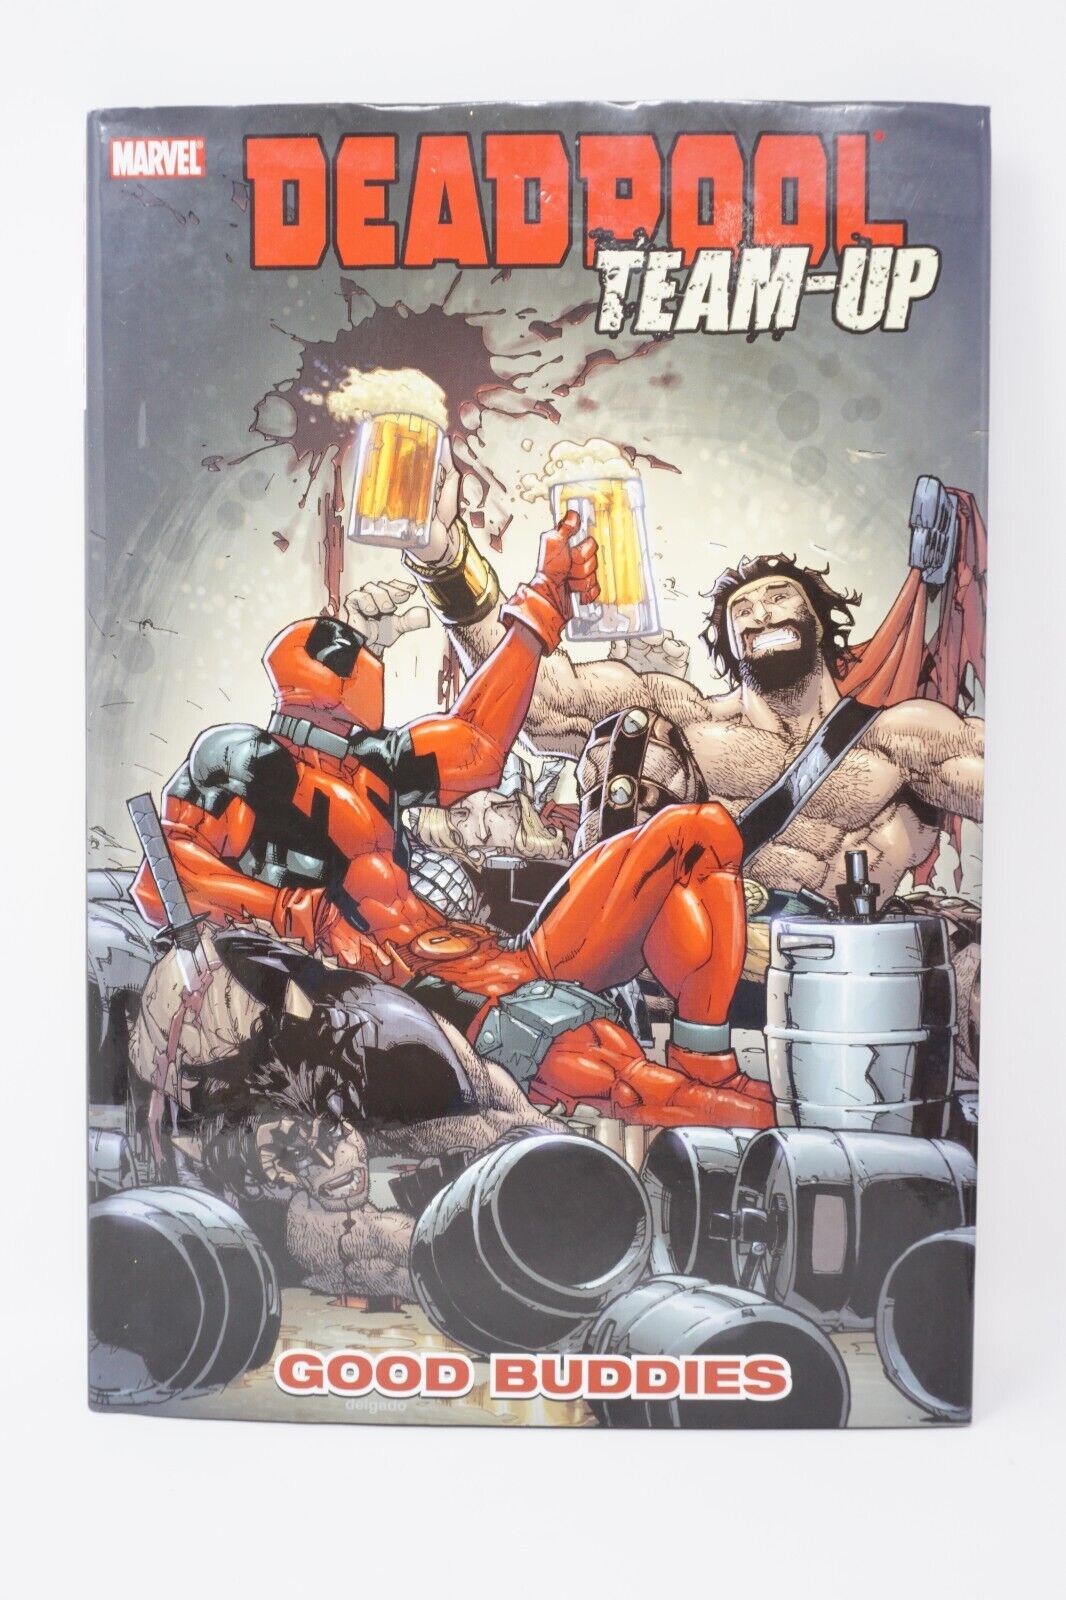 Deadpool Team Up vol 1 Good Buddies Hardcover